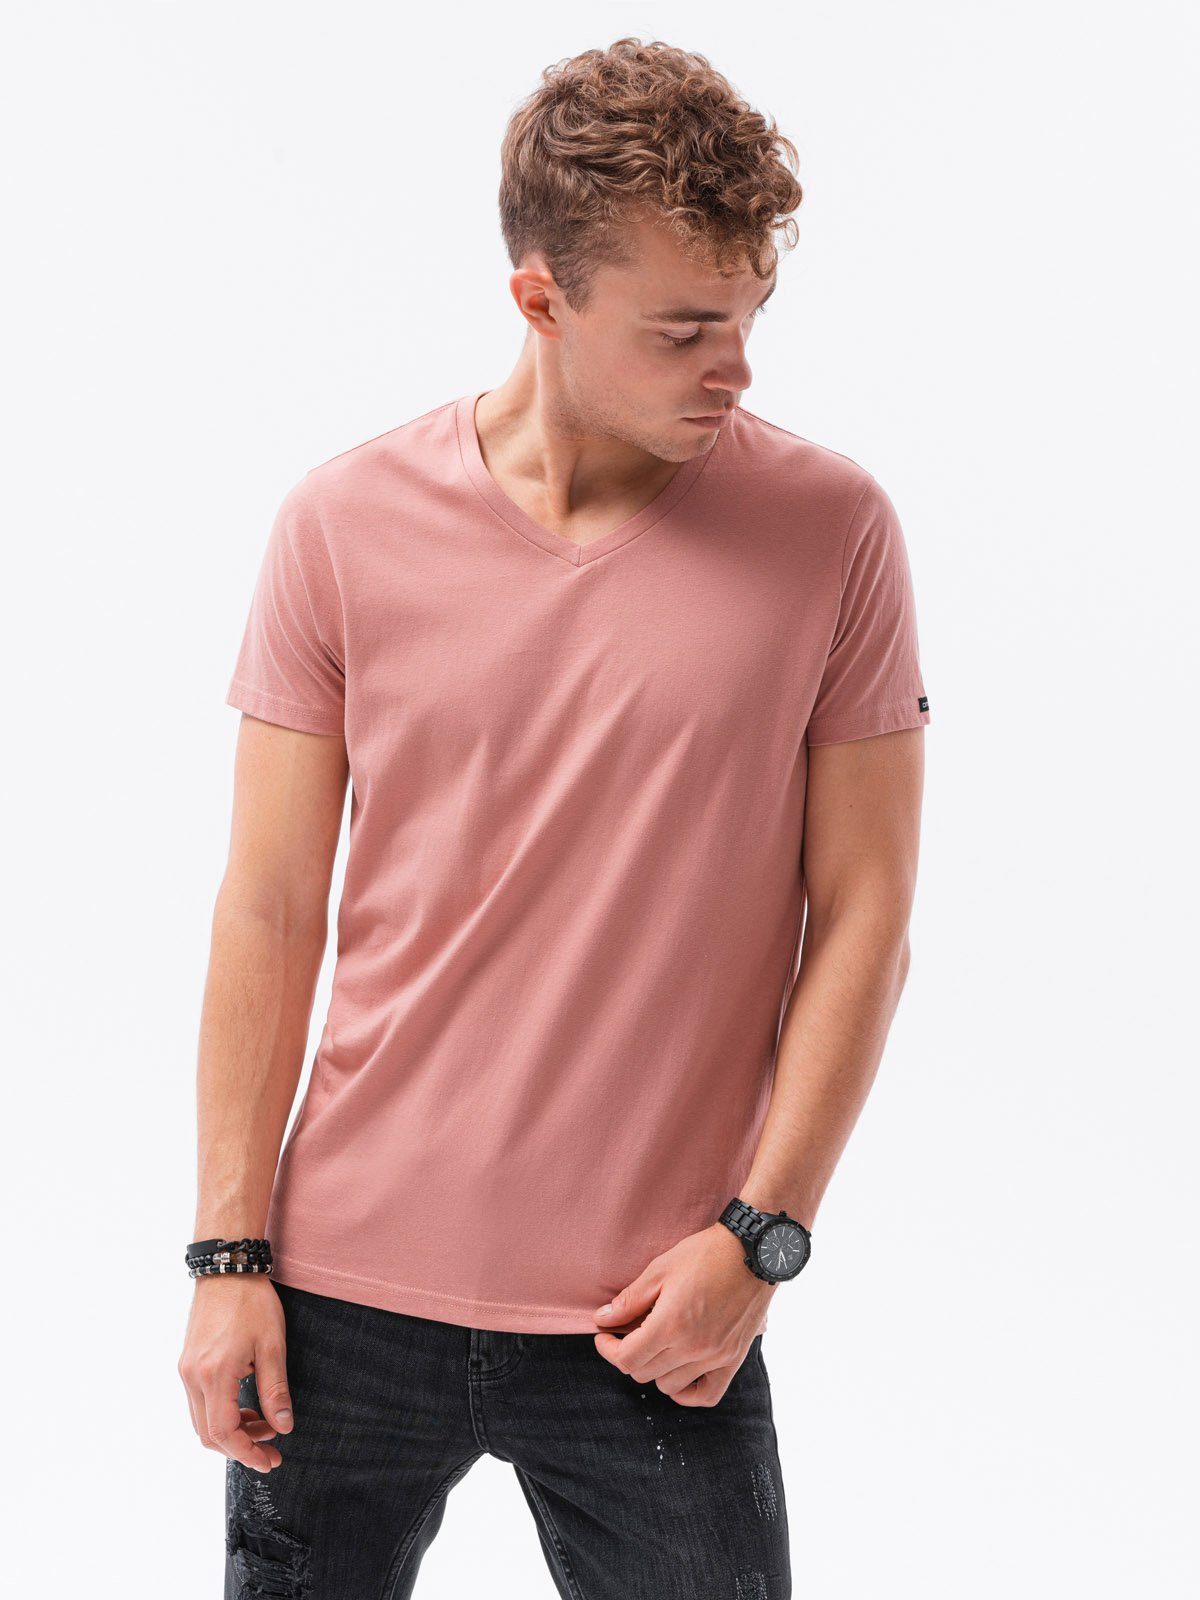 OMBRE T-Shirt Klassisches Herren-T-Shirt BASIC mit V-Ausschnitt - rosa V7 S1369 L rot